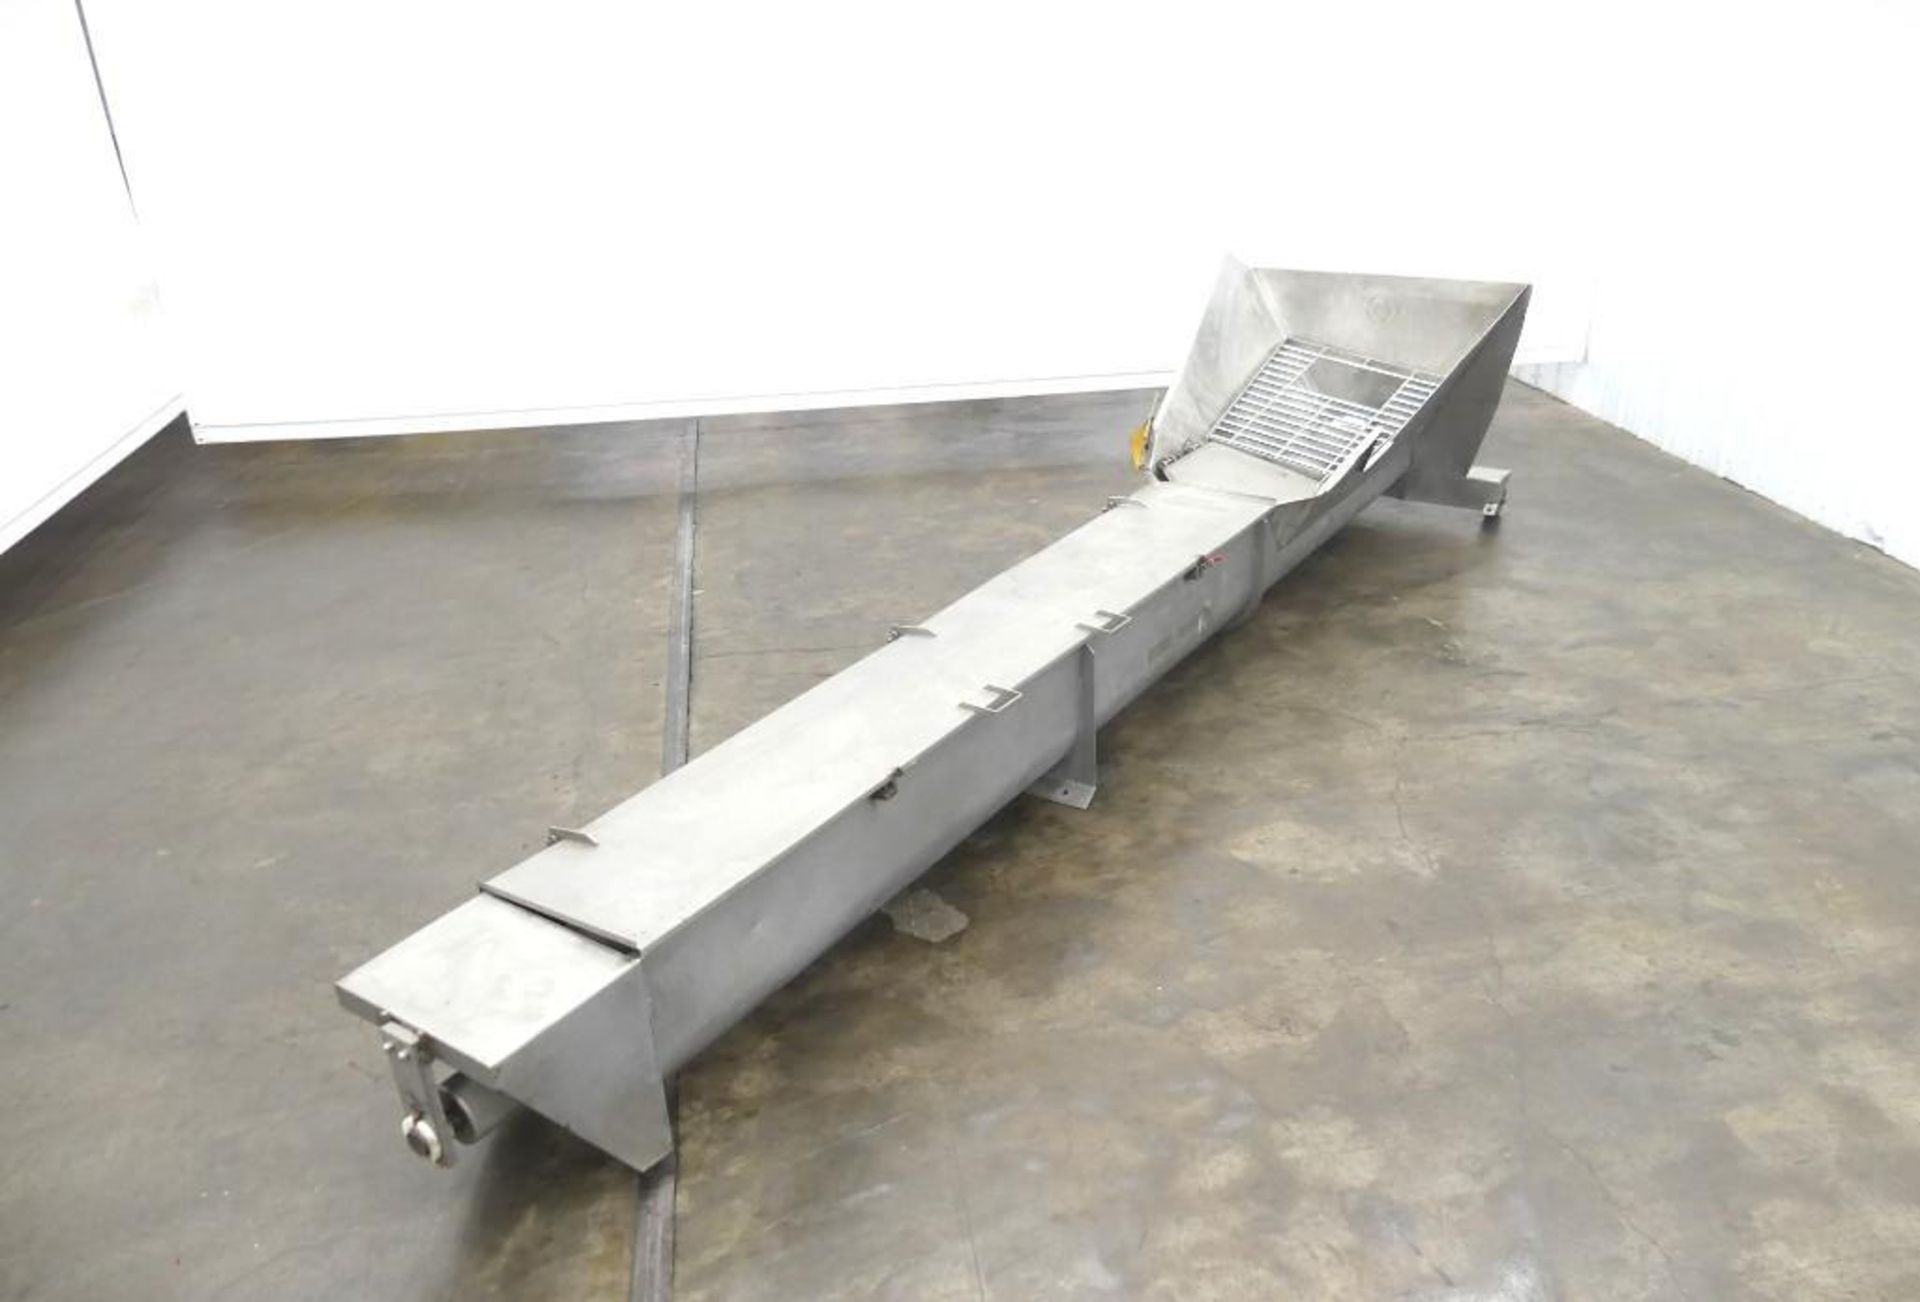 Auger Conveyor 17 Foot Long 15 Inch Diameter - Image 3 of 10